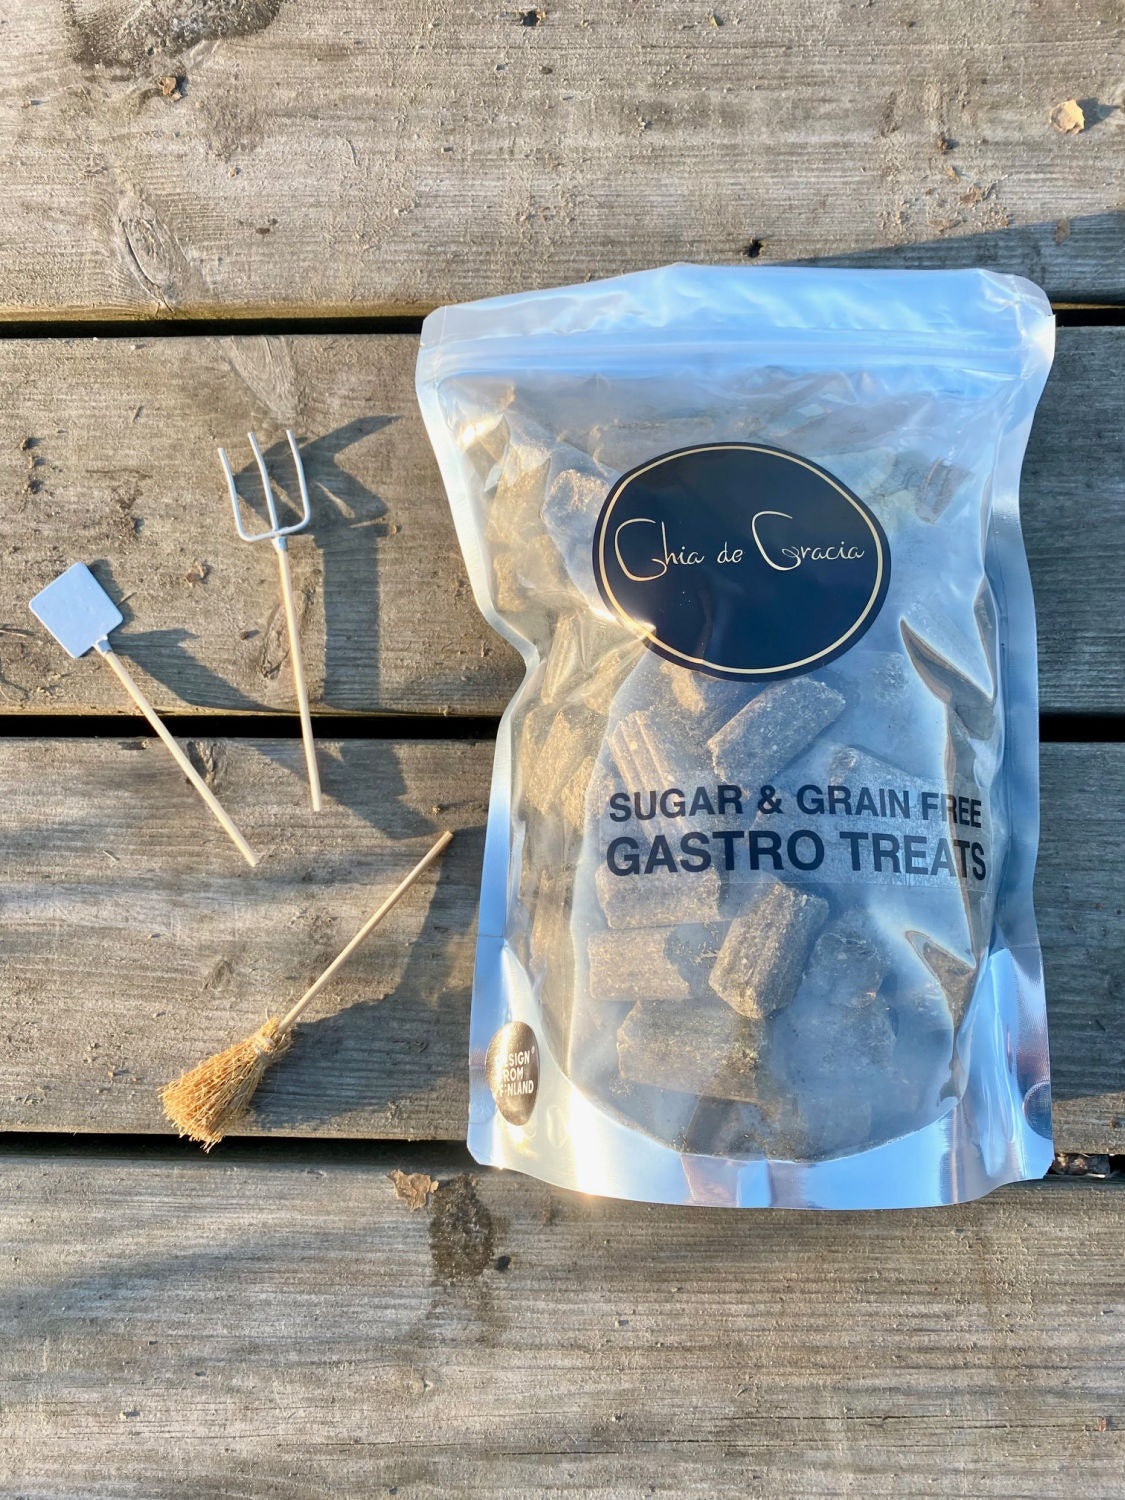 NEW: Sugar & Grain free GASTRO TREATS 1 kg